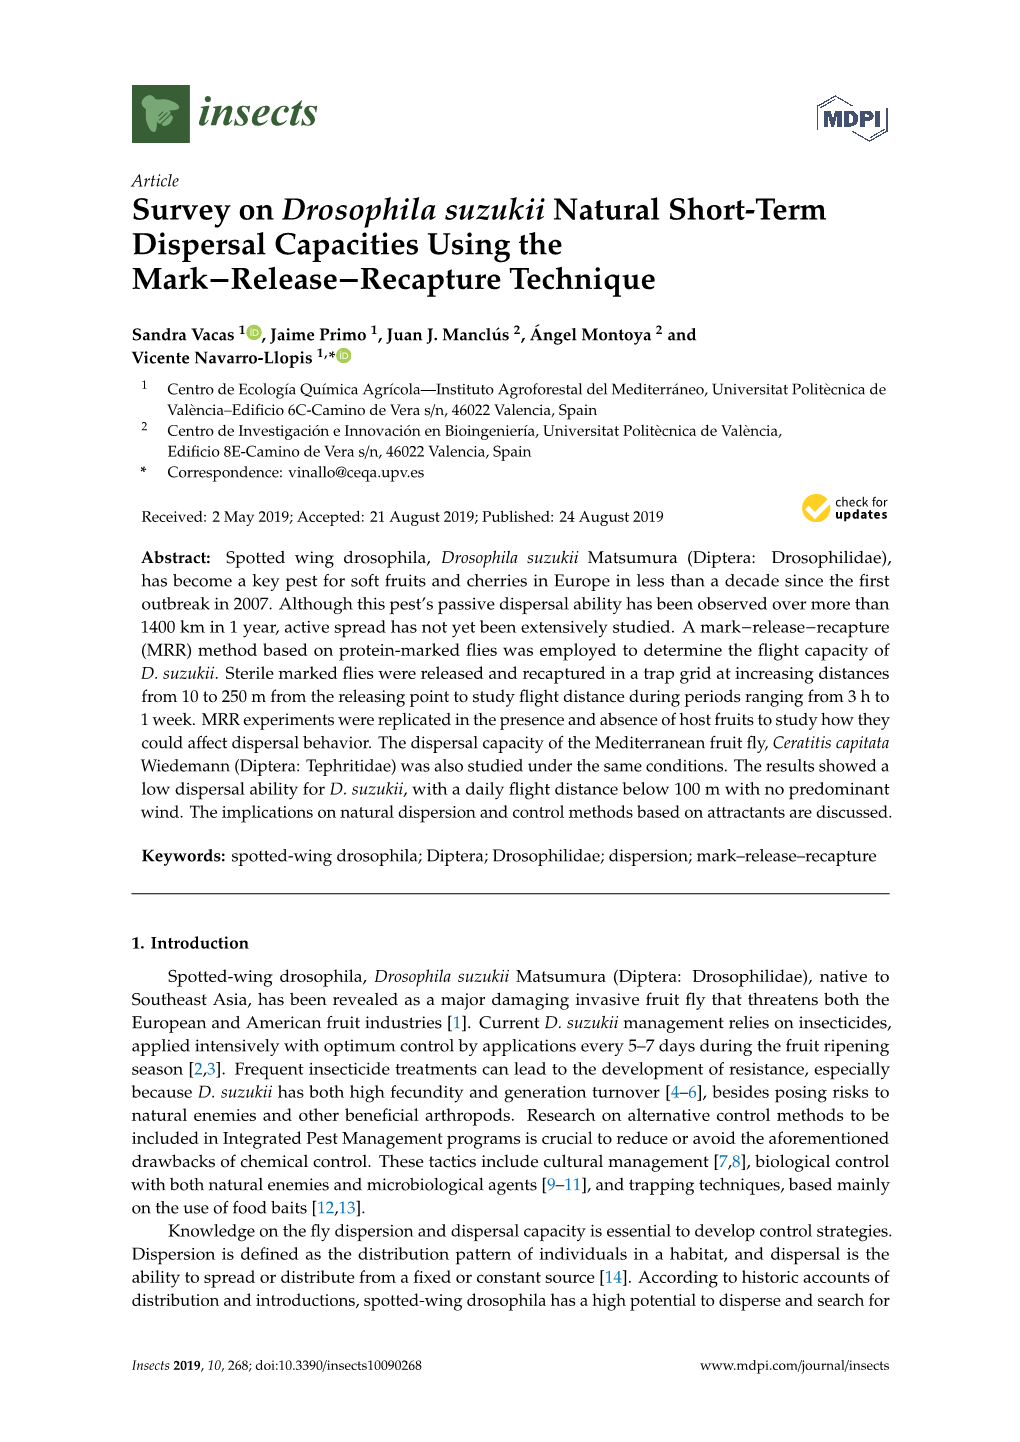 Survey on Drosophila Suzukii Natural Short-Term Dispersal Capacities Using the Mark-Release-Recapture Technique